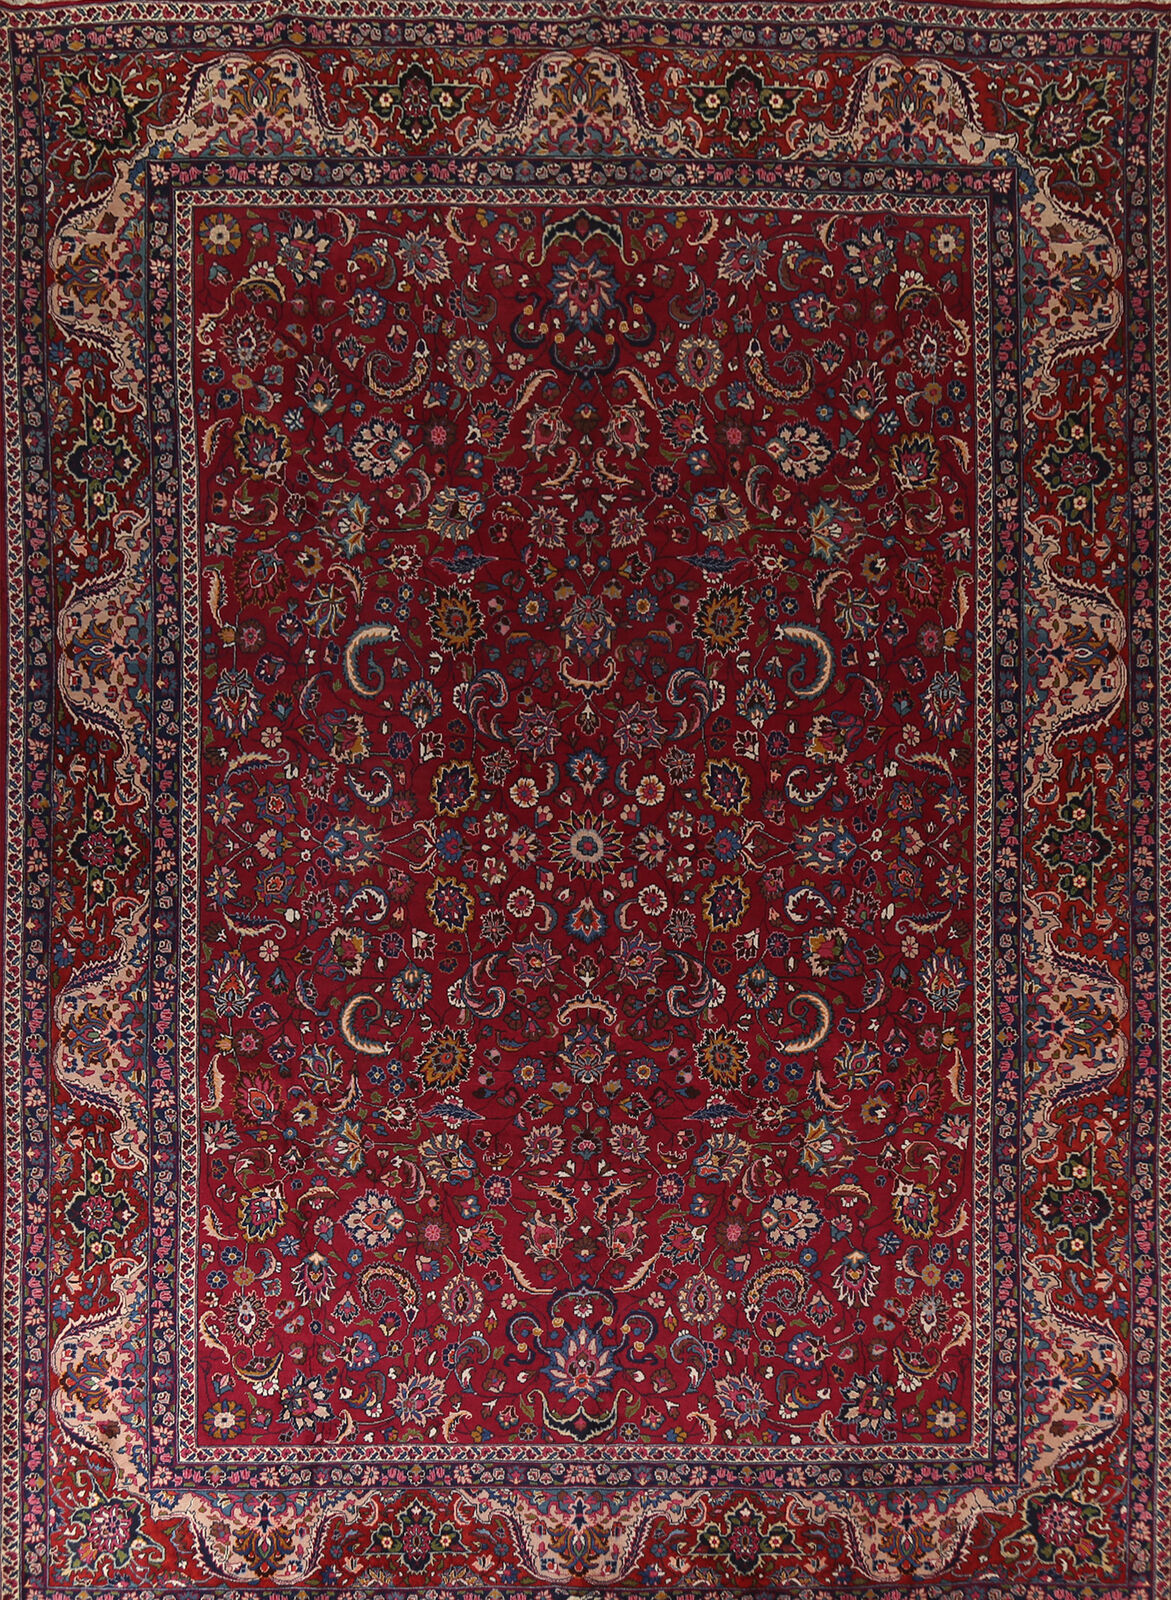 Vintage Handmade Red/ Navy Blue Floral Mashaad Dining Room Rug Area Carpet 10x13